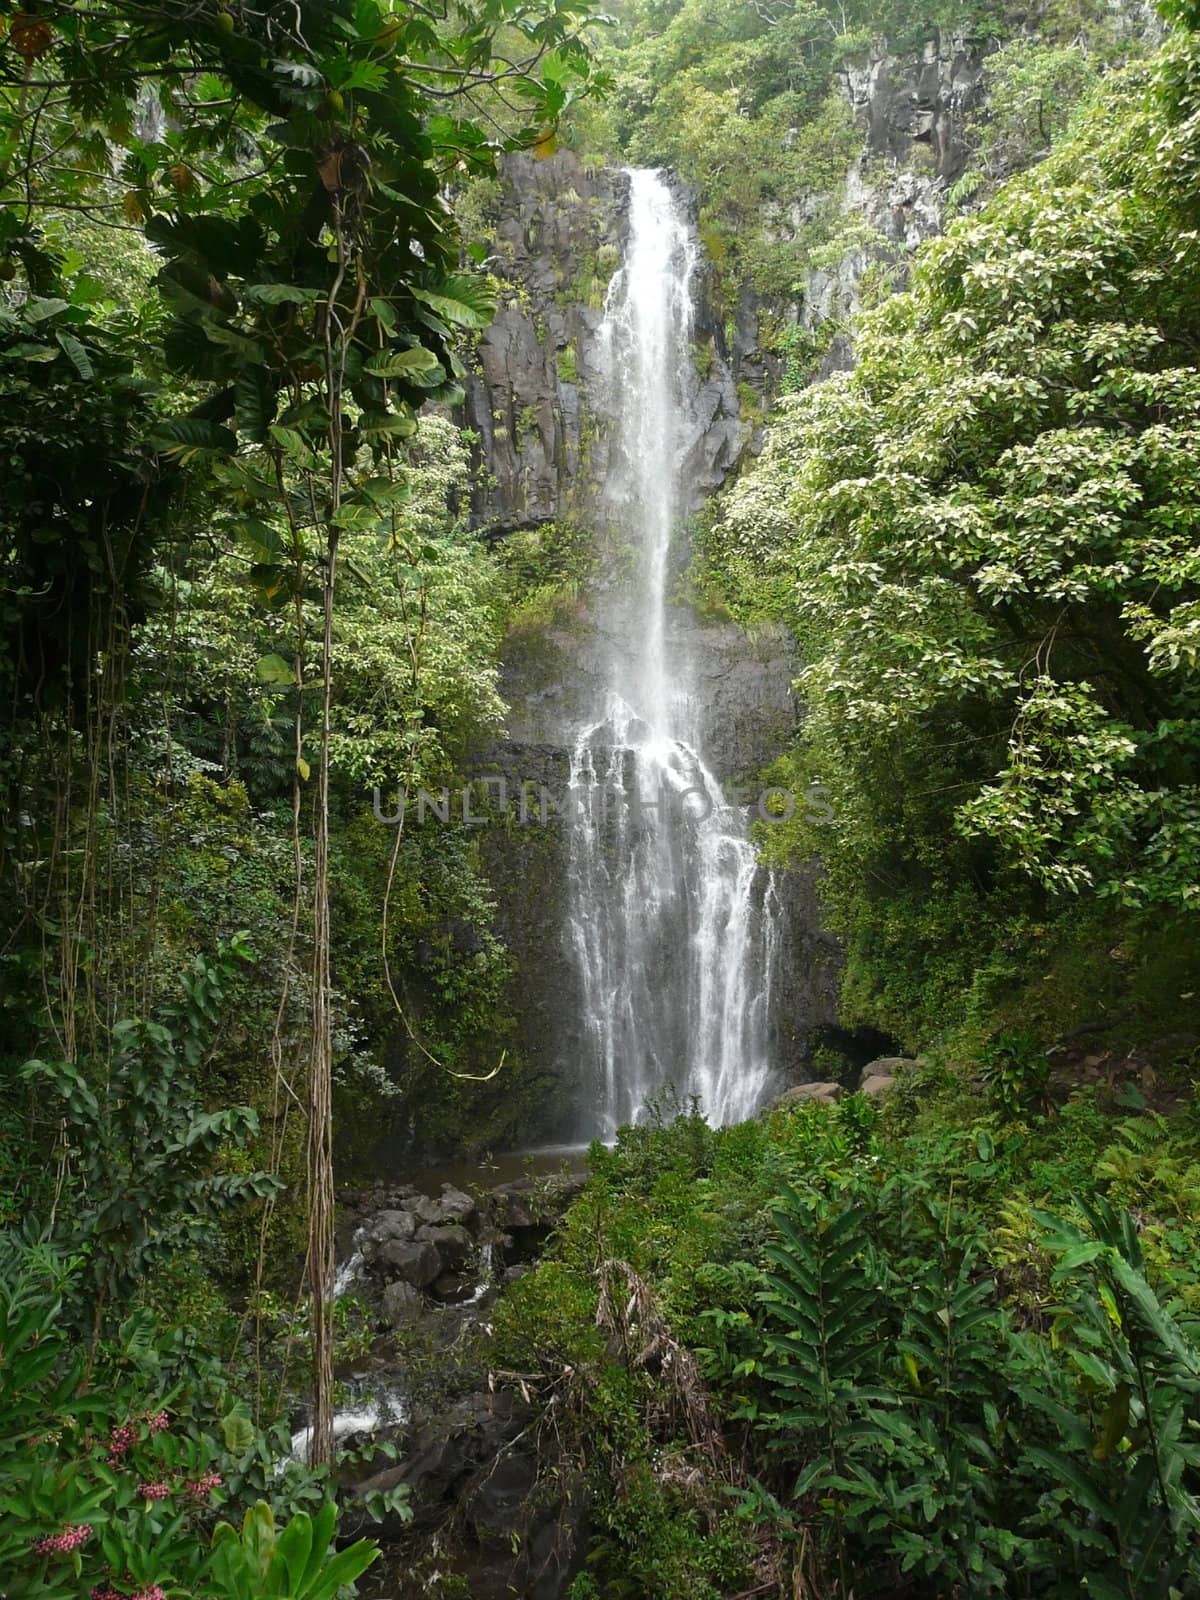 Tropical waterfall in a lush green jungle surroundings along the road to Hana on Maui, Hawaii.